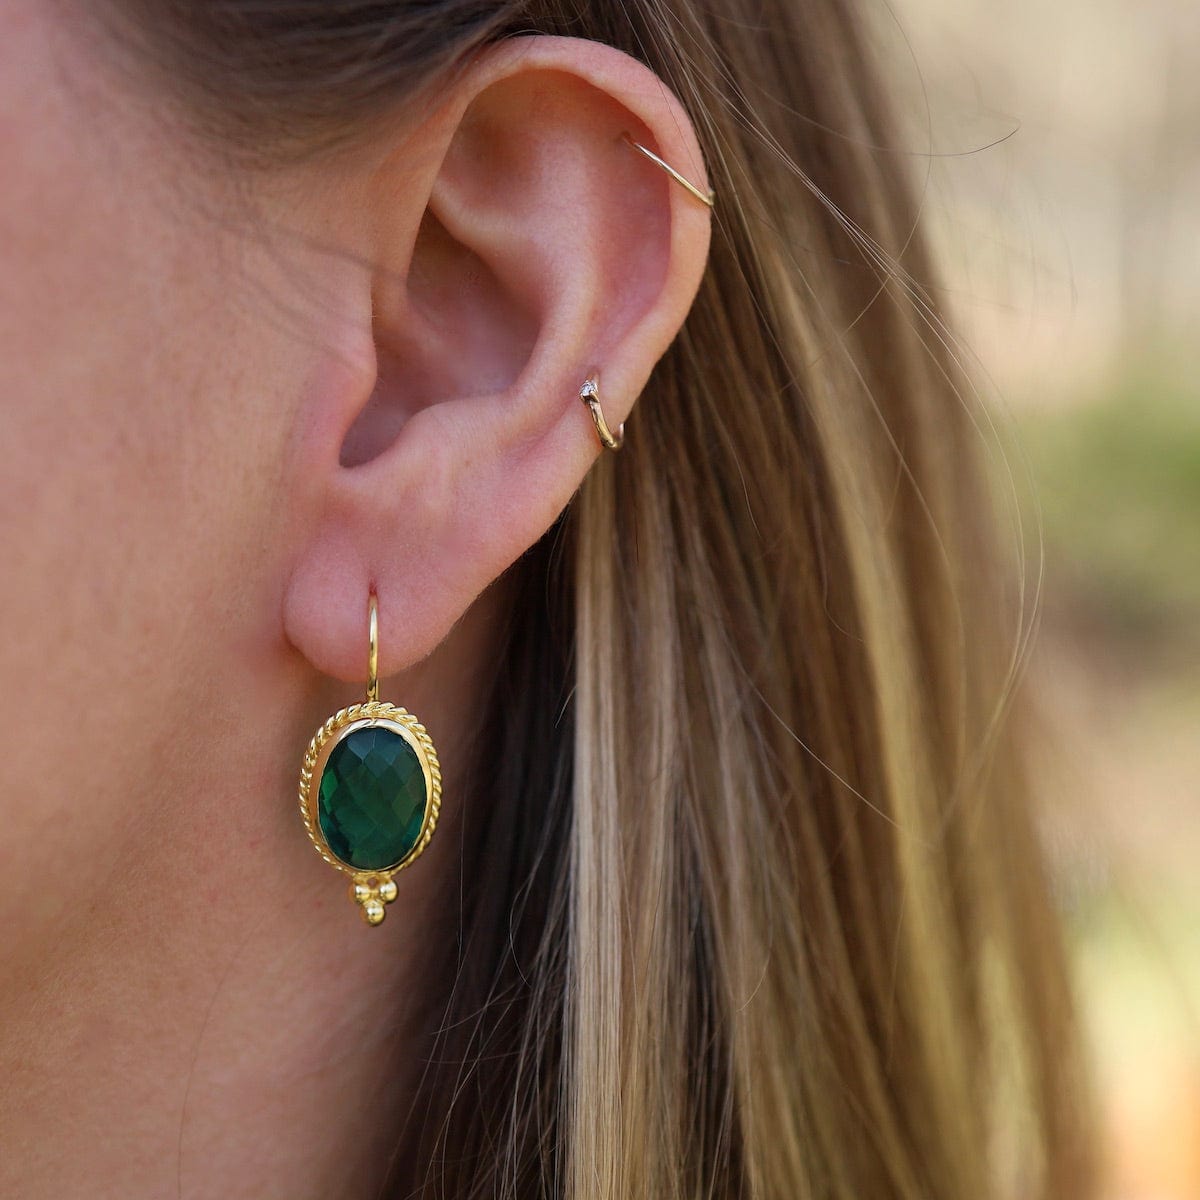 EAR-GPL Boho Earrings Gold with Green Tourmaline